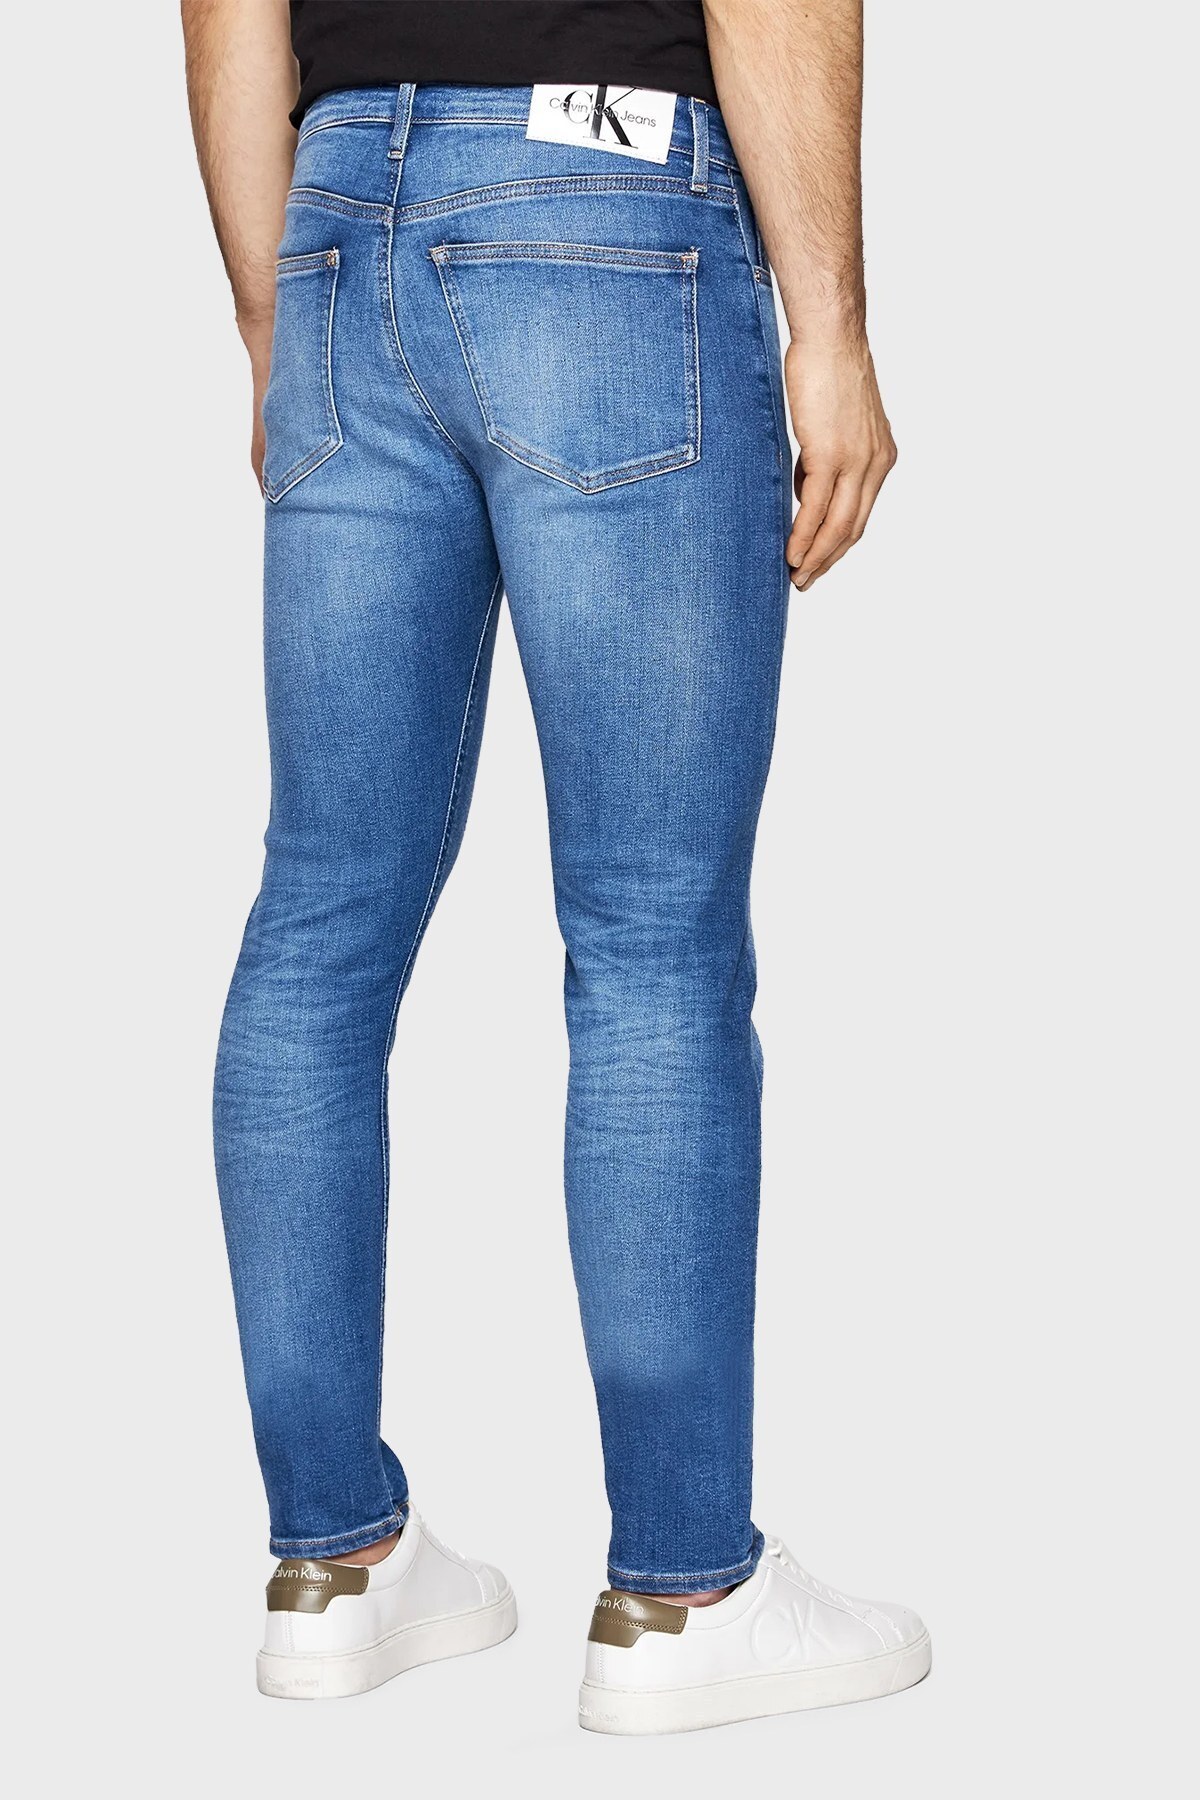 Calvin Klein Skinny Fit Düşük Bel Dar Paça Pamuklu Jeans Erkek Kot Pantolon J30J320463 1A4 LACİVERT